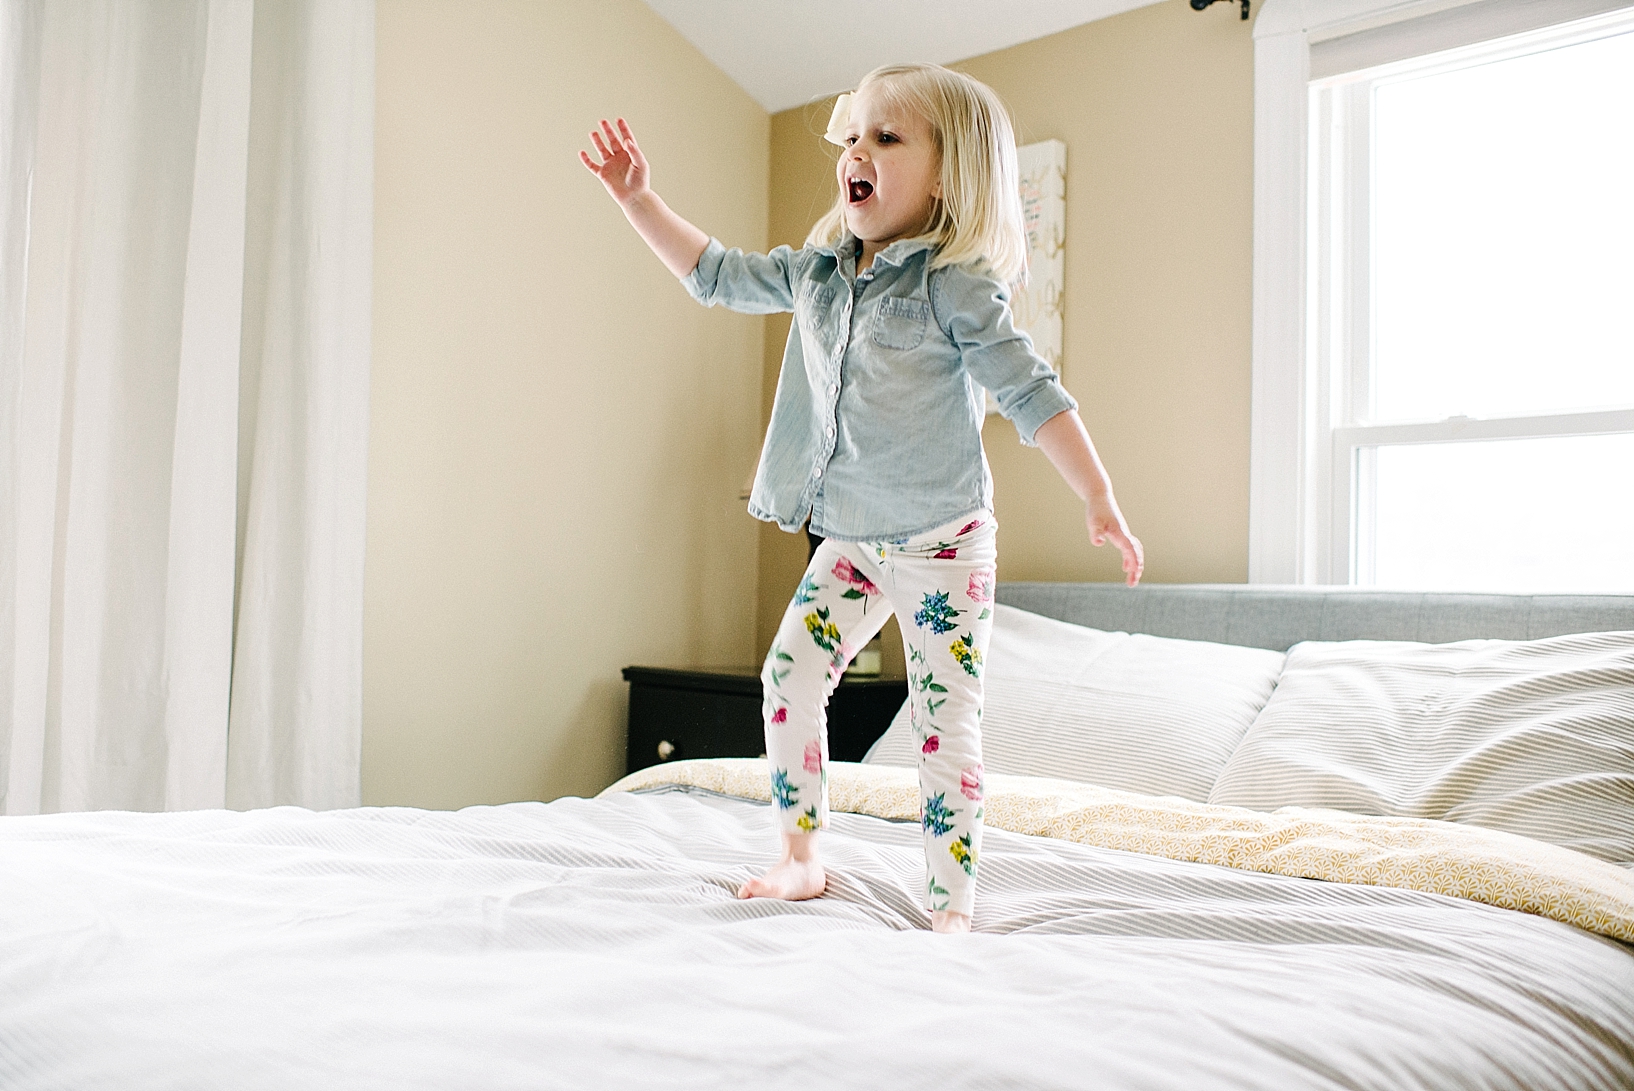 blonde toddler girl wearing denim shirt and floral leggings jumping on bed